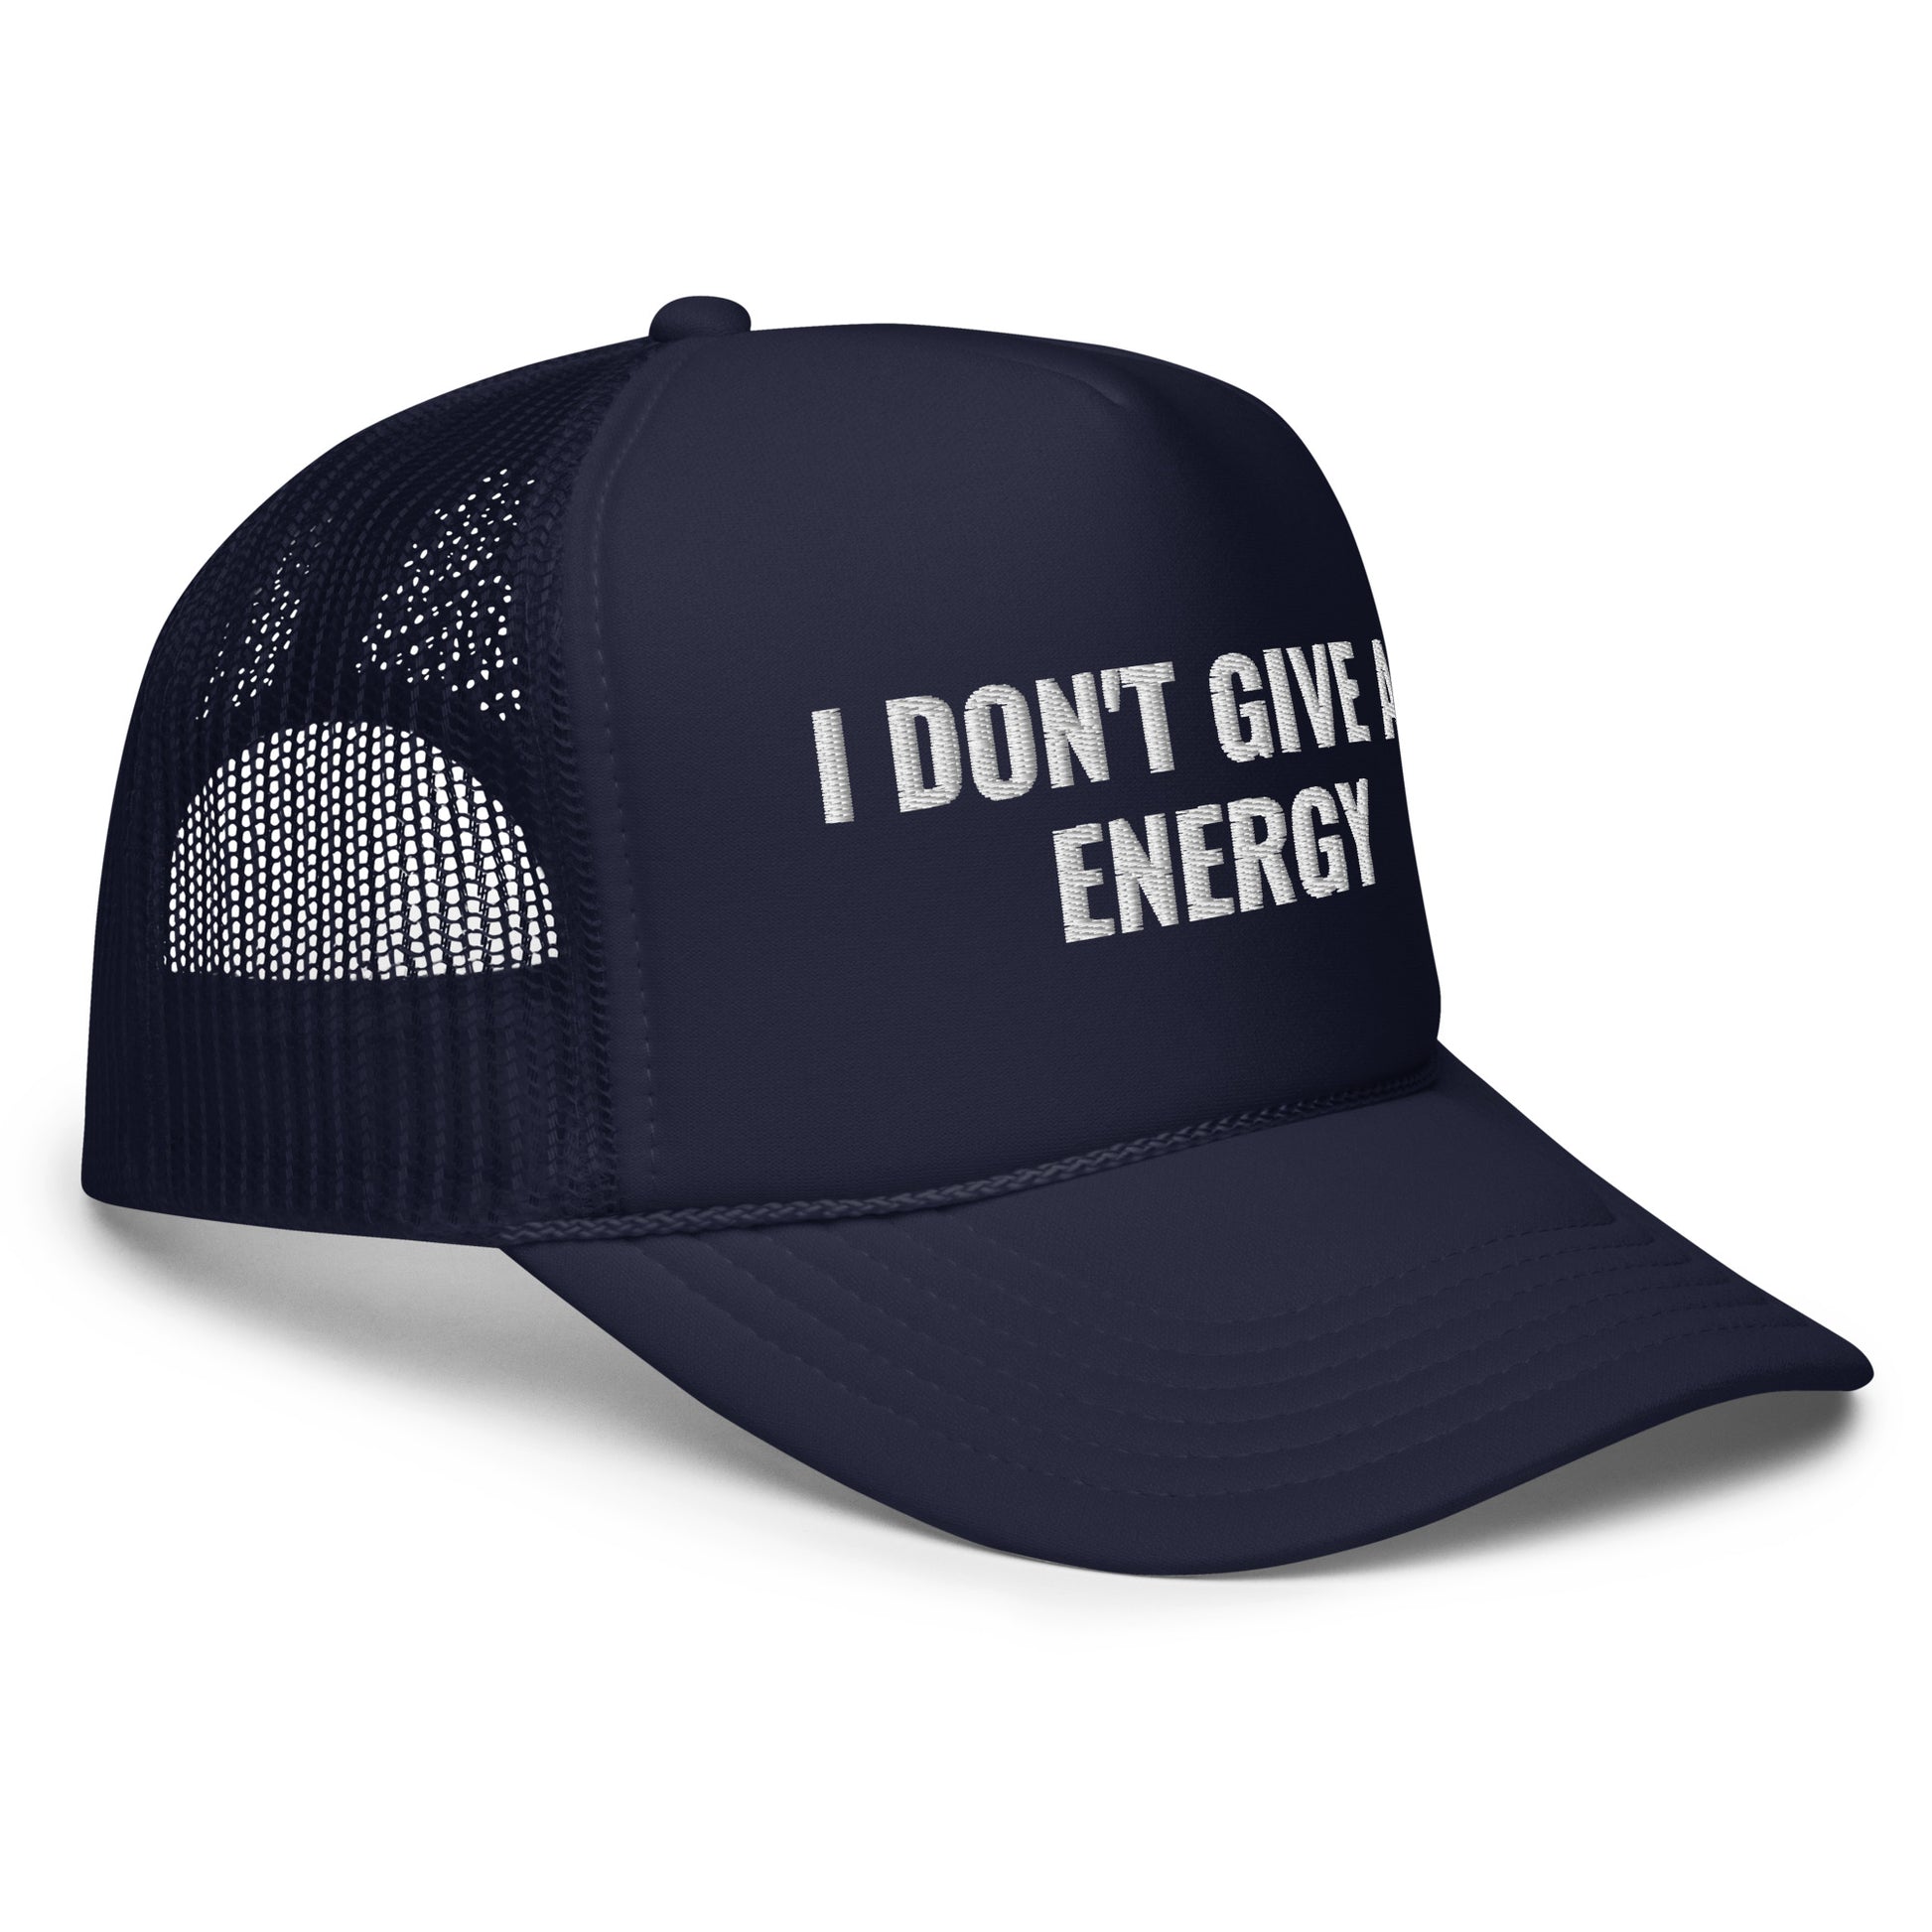 IDGAF trucker hat - PROTECT YO ENERGY 